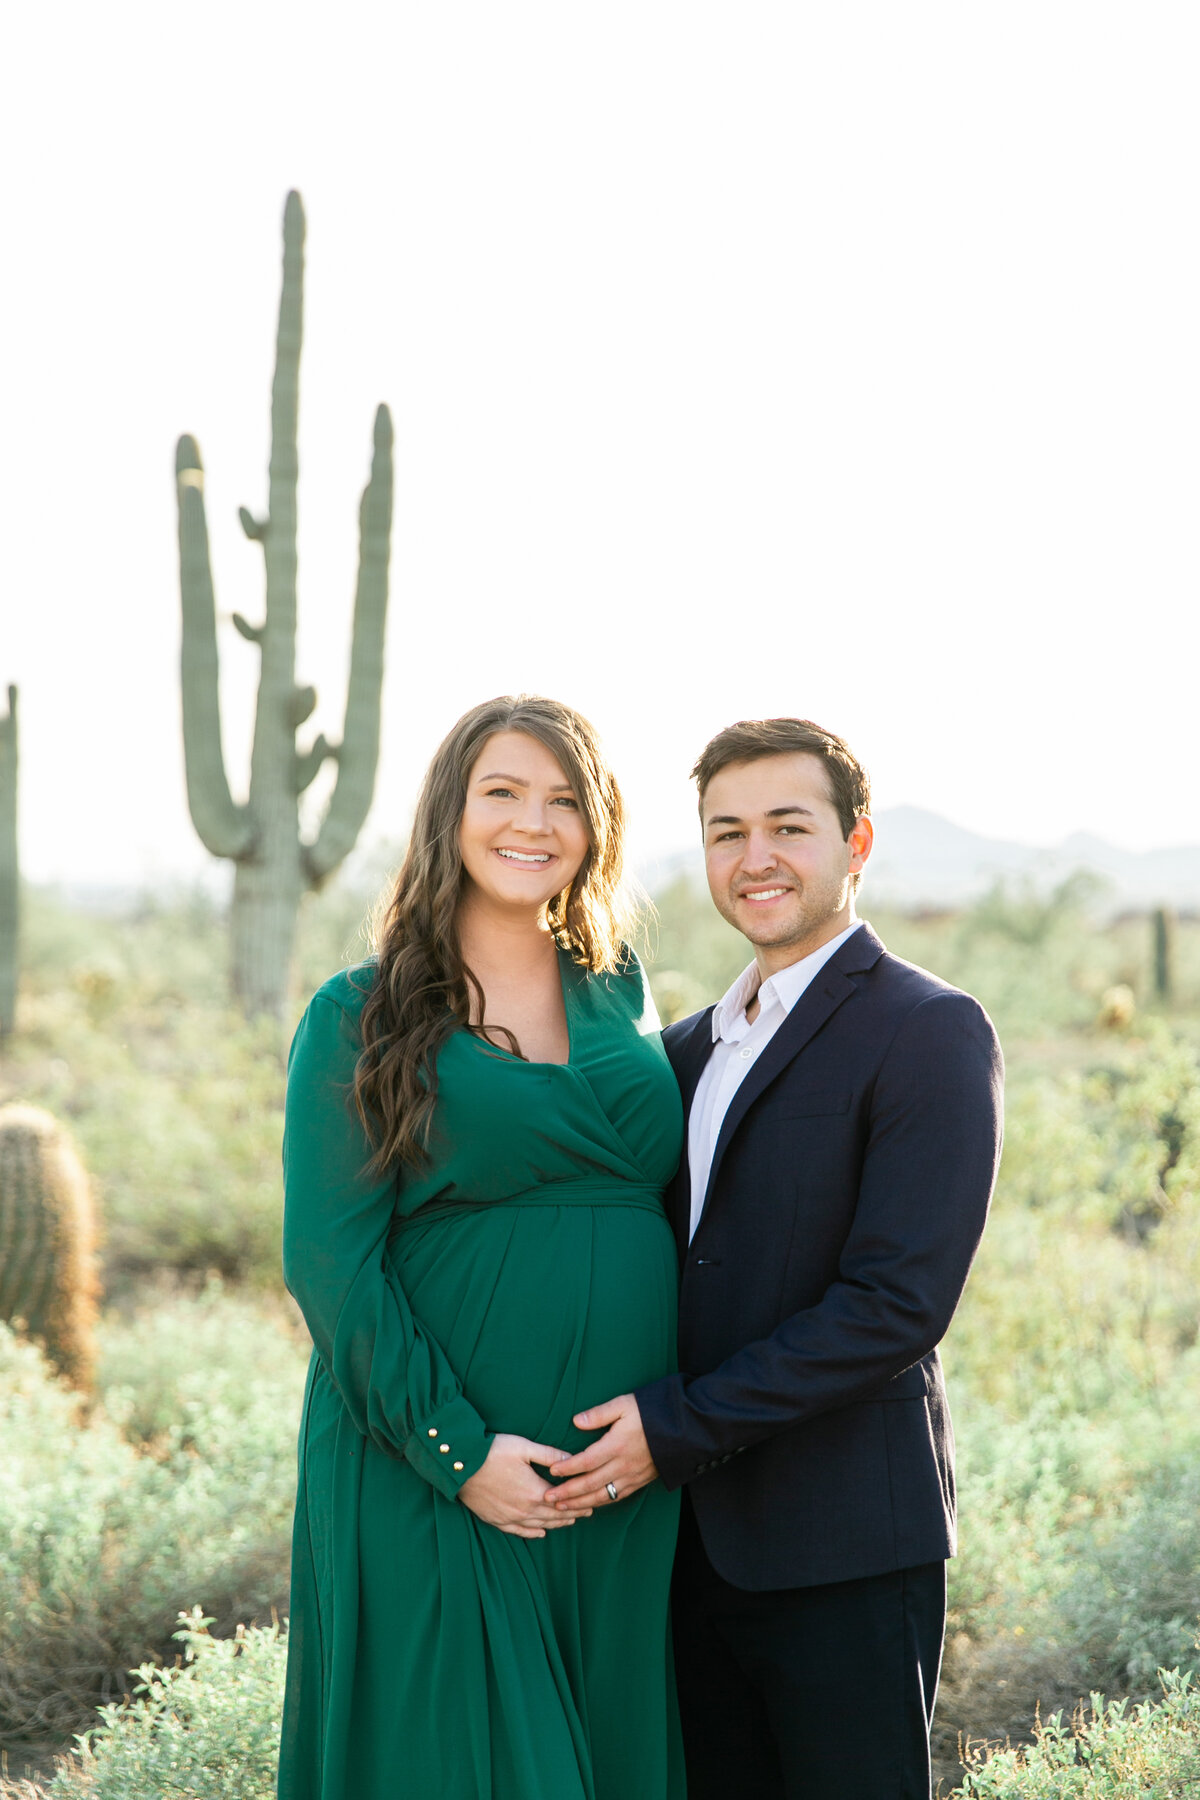 Karlie Colleen Photography - Scottsdale Arizona - Maternity Photos - Shelby & Cris-15